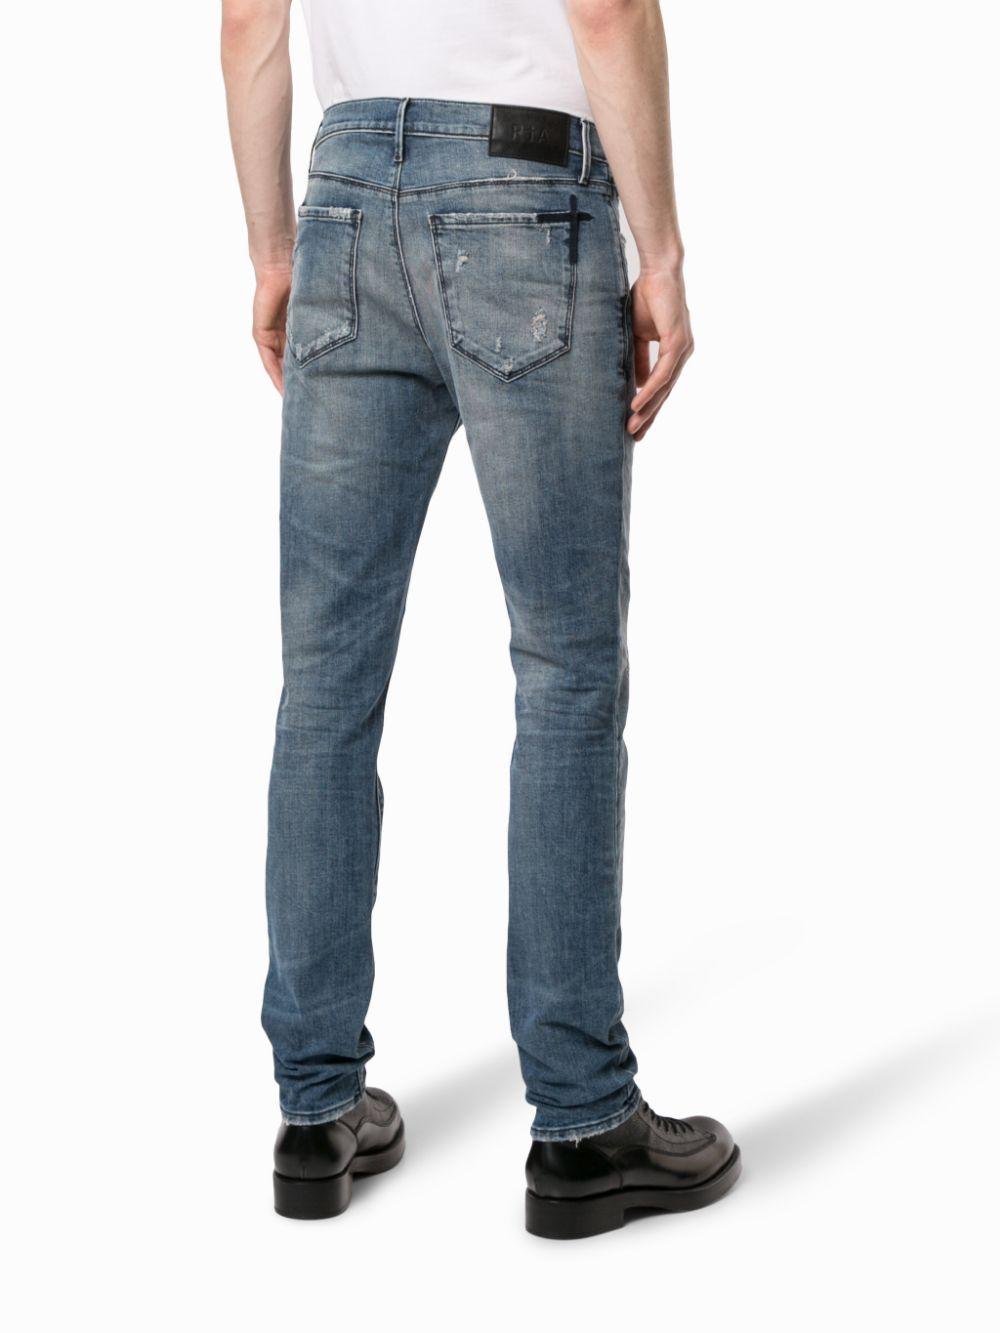 RTA Denim Distressed Skinny Jeans in Blue for Men - Lyst